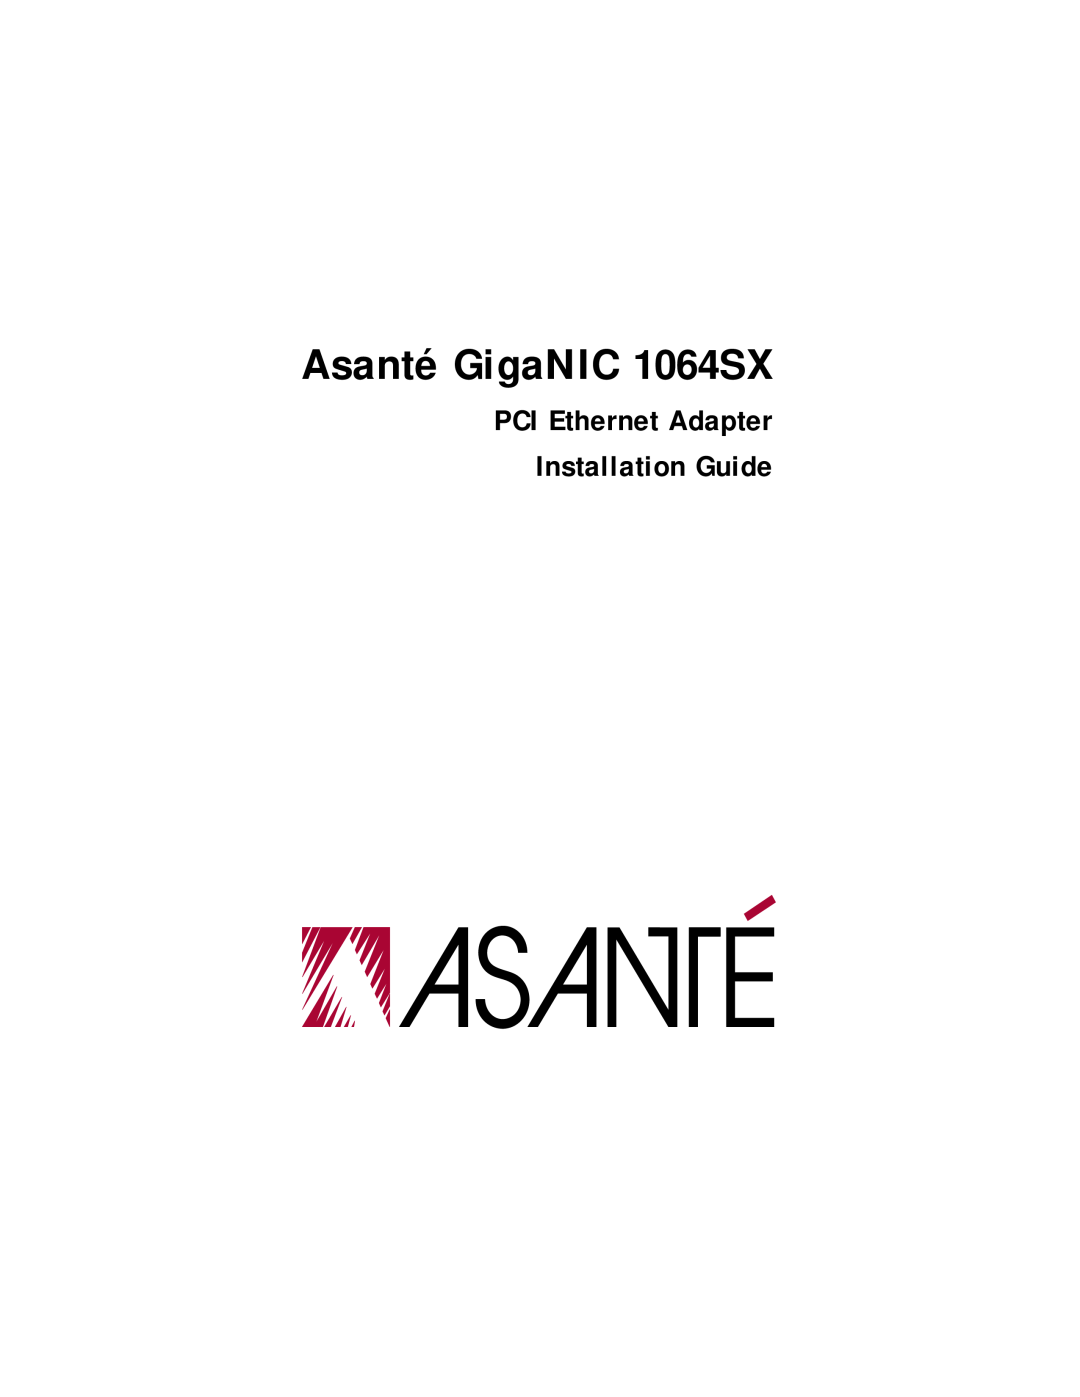 Asante Technologies manual PCI Ethernet Adapter Installation Guide, Asanté GigaNIC 1064SX 